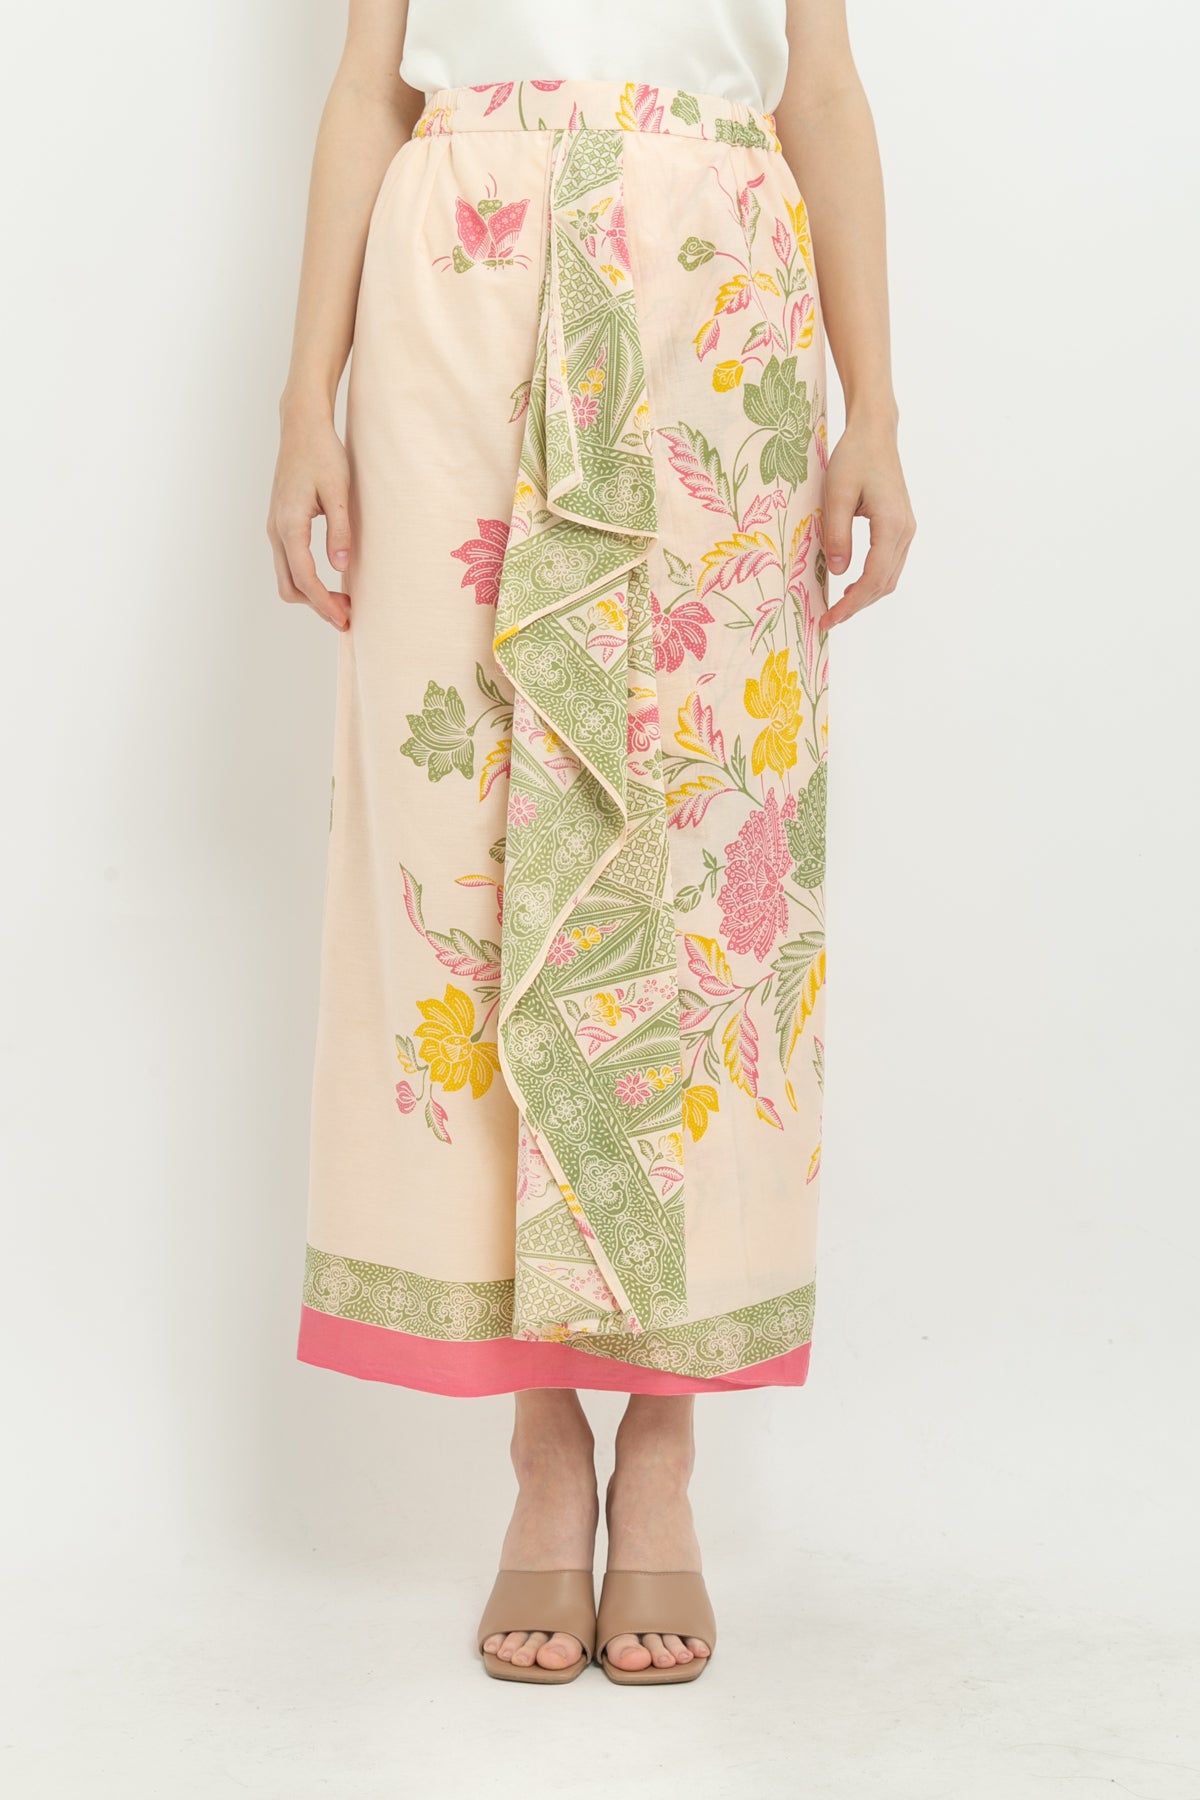 Batik Skirt in Ivory Pink